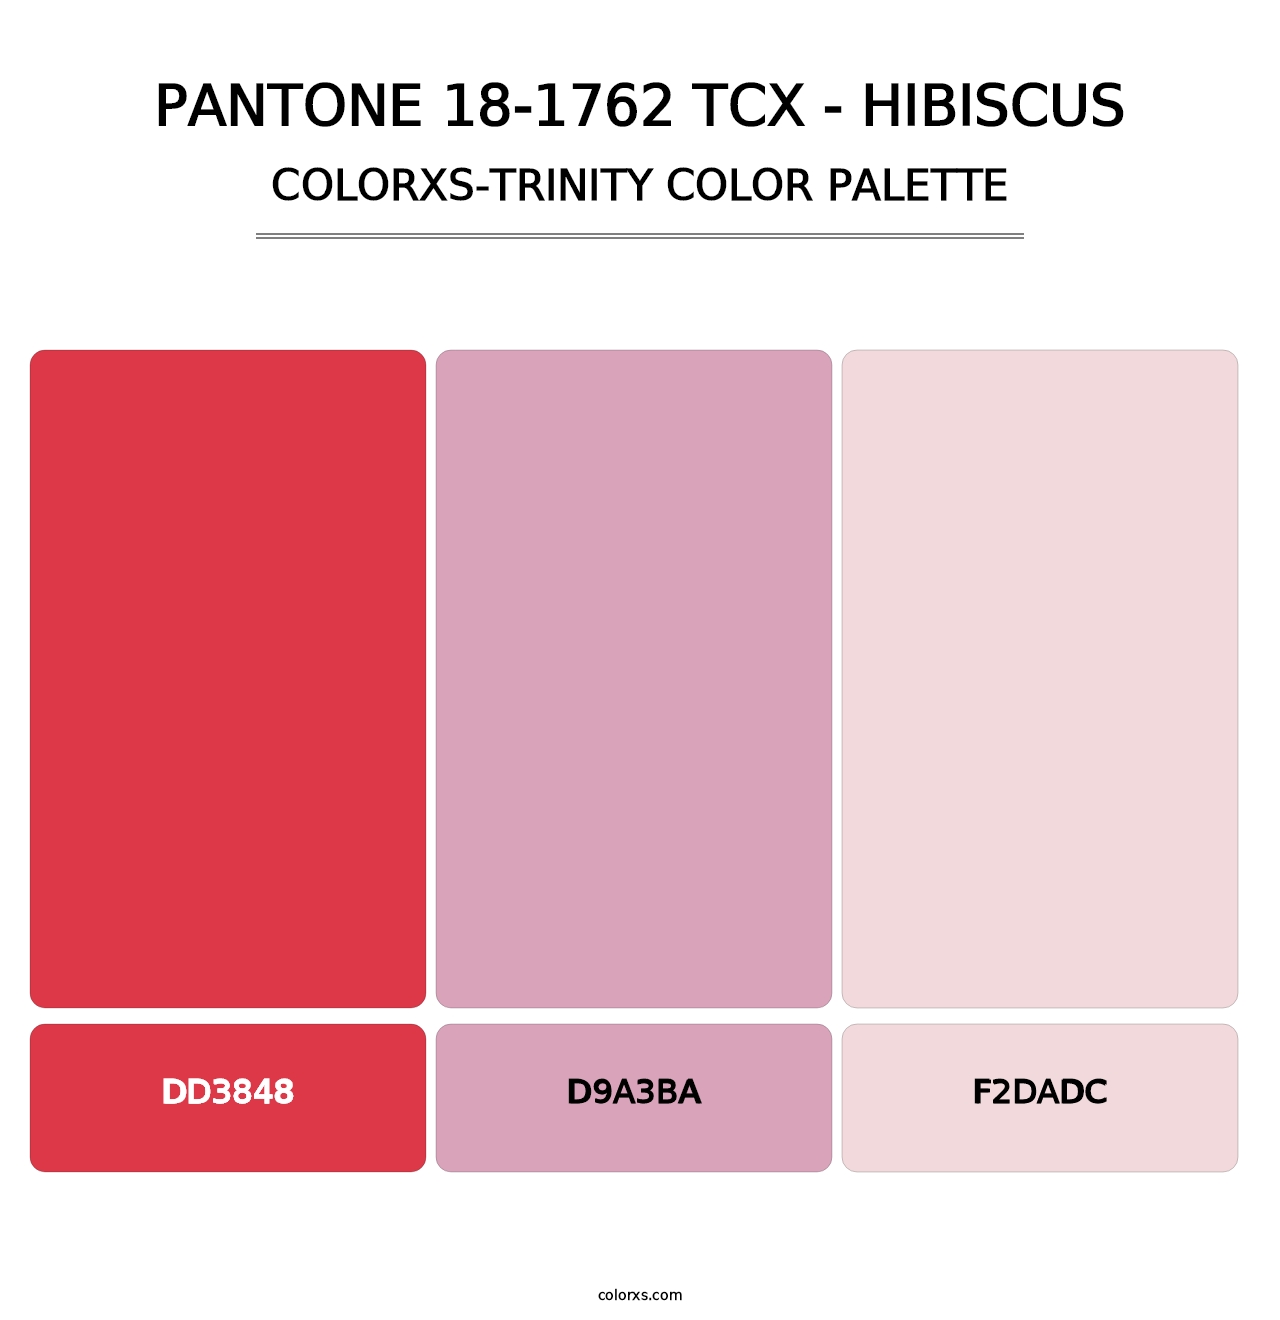 PANTONE 18-1762 TCX - Hibiscus - Colorxs Trinity Palette